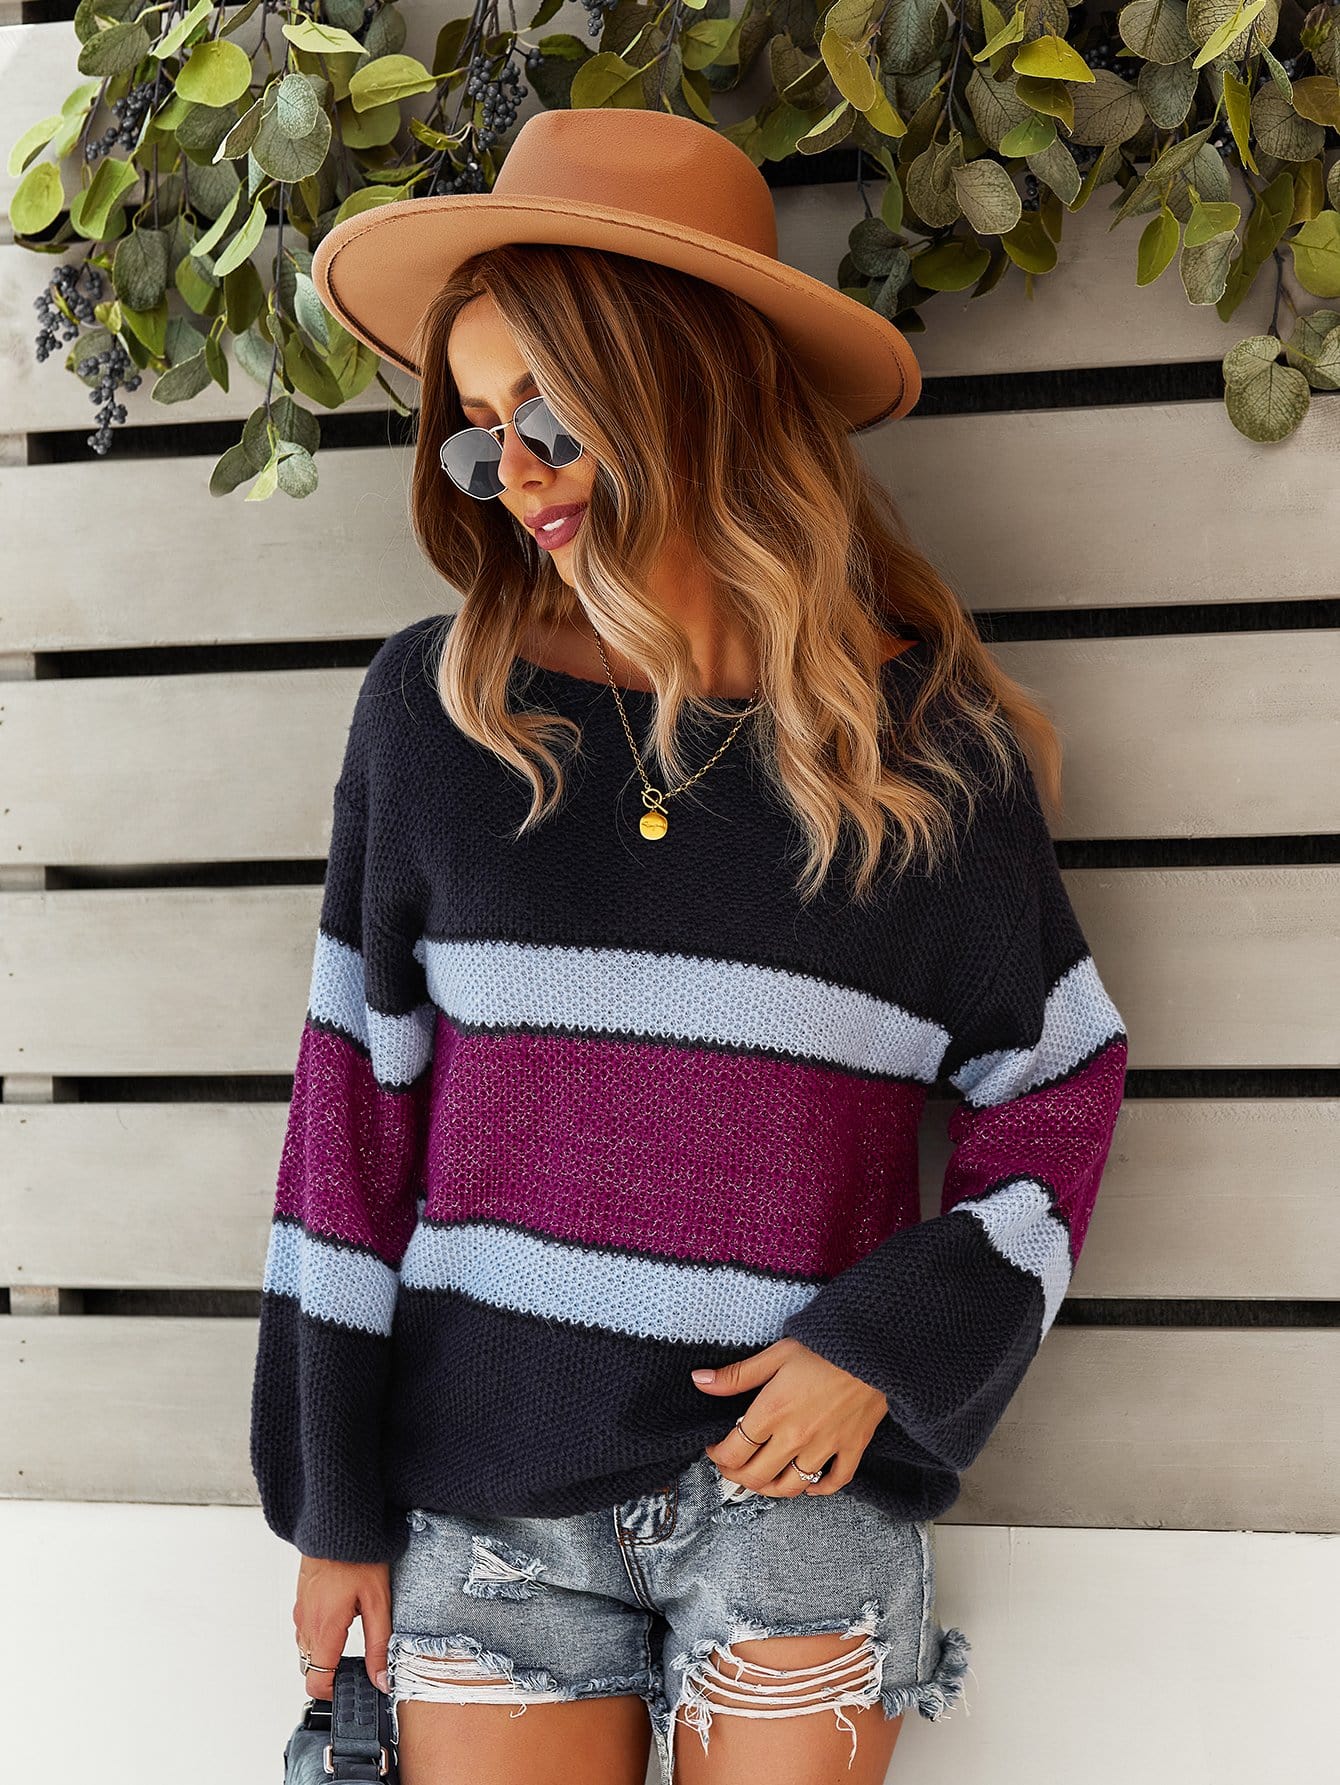 Boat Neck Striped Sweater